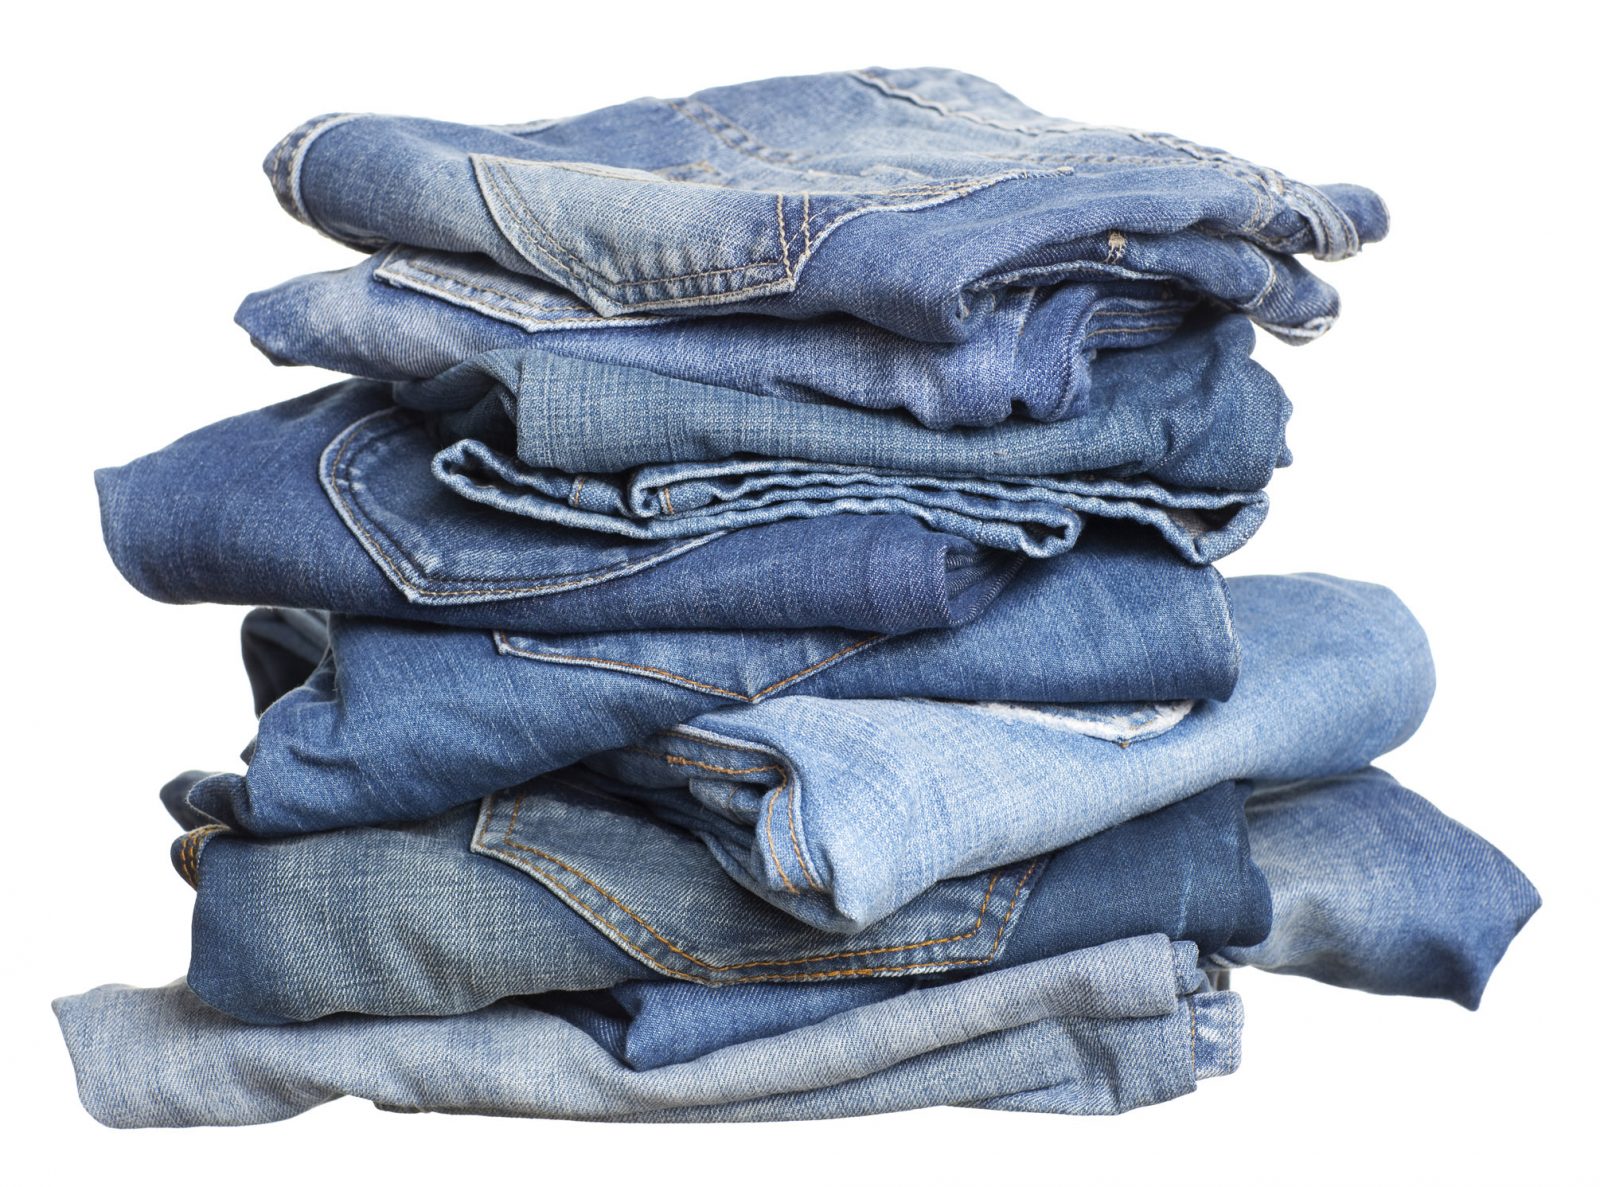 A stack of denim blue jeans.